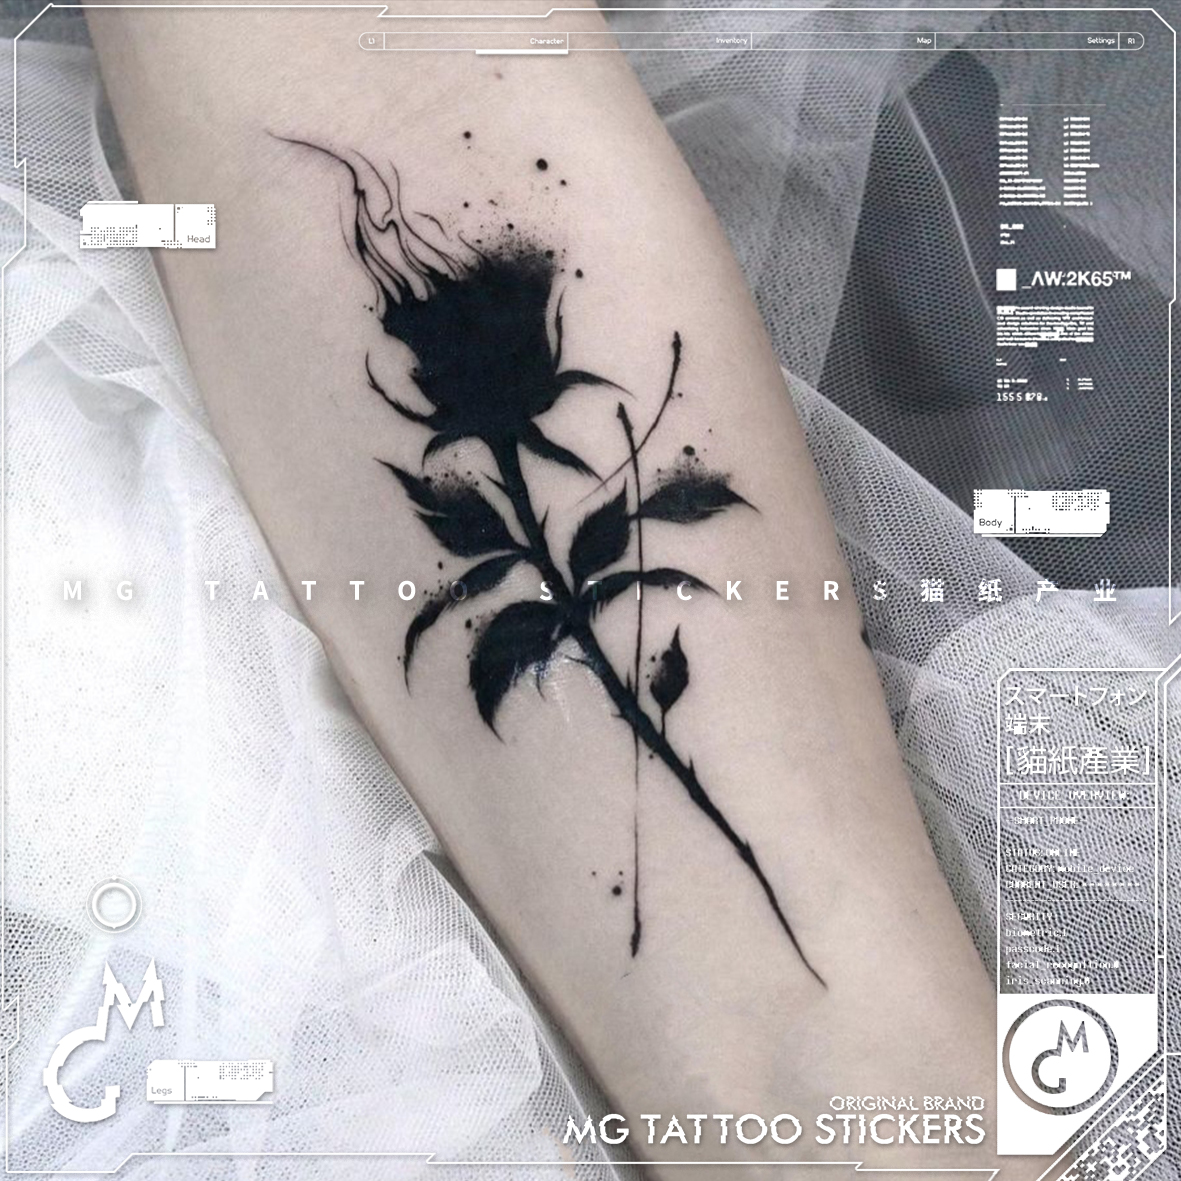 MG tattoo 暗黑系黑色火焰禁忌玫瑰荆刺花朵图案纹身贴纸男女个性